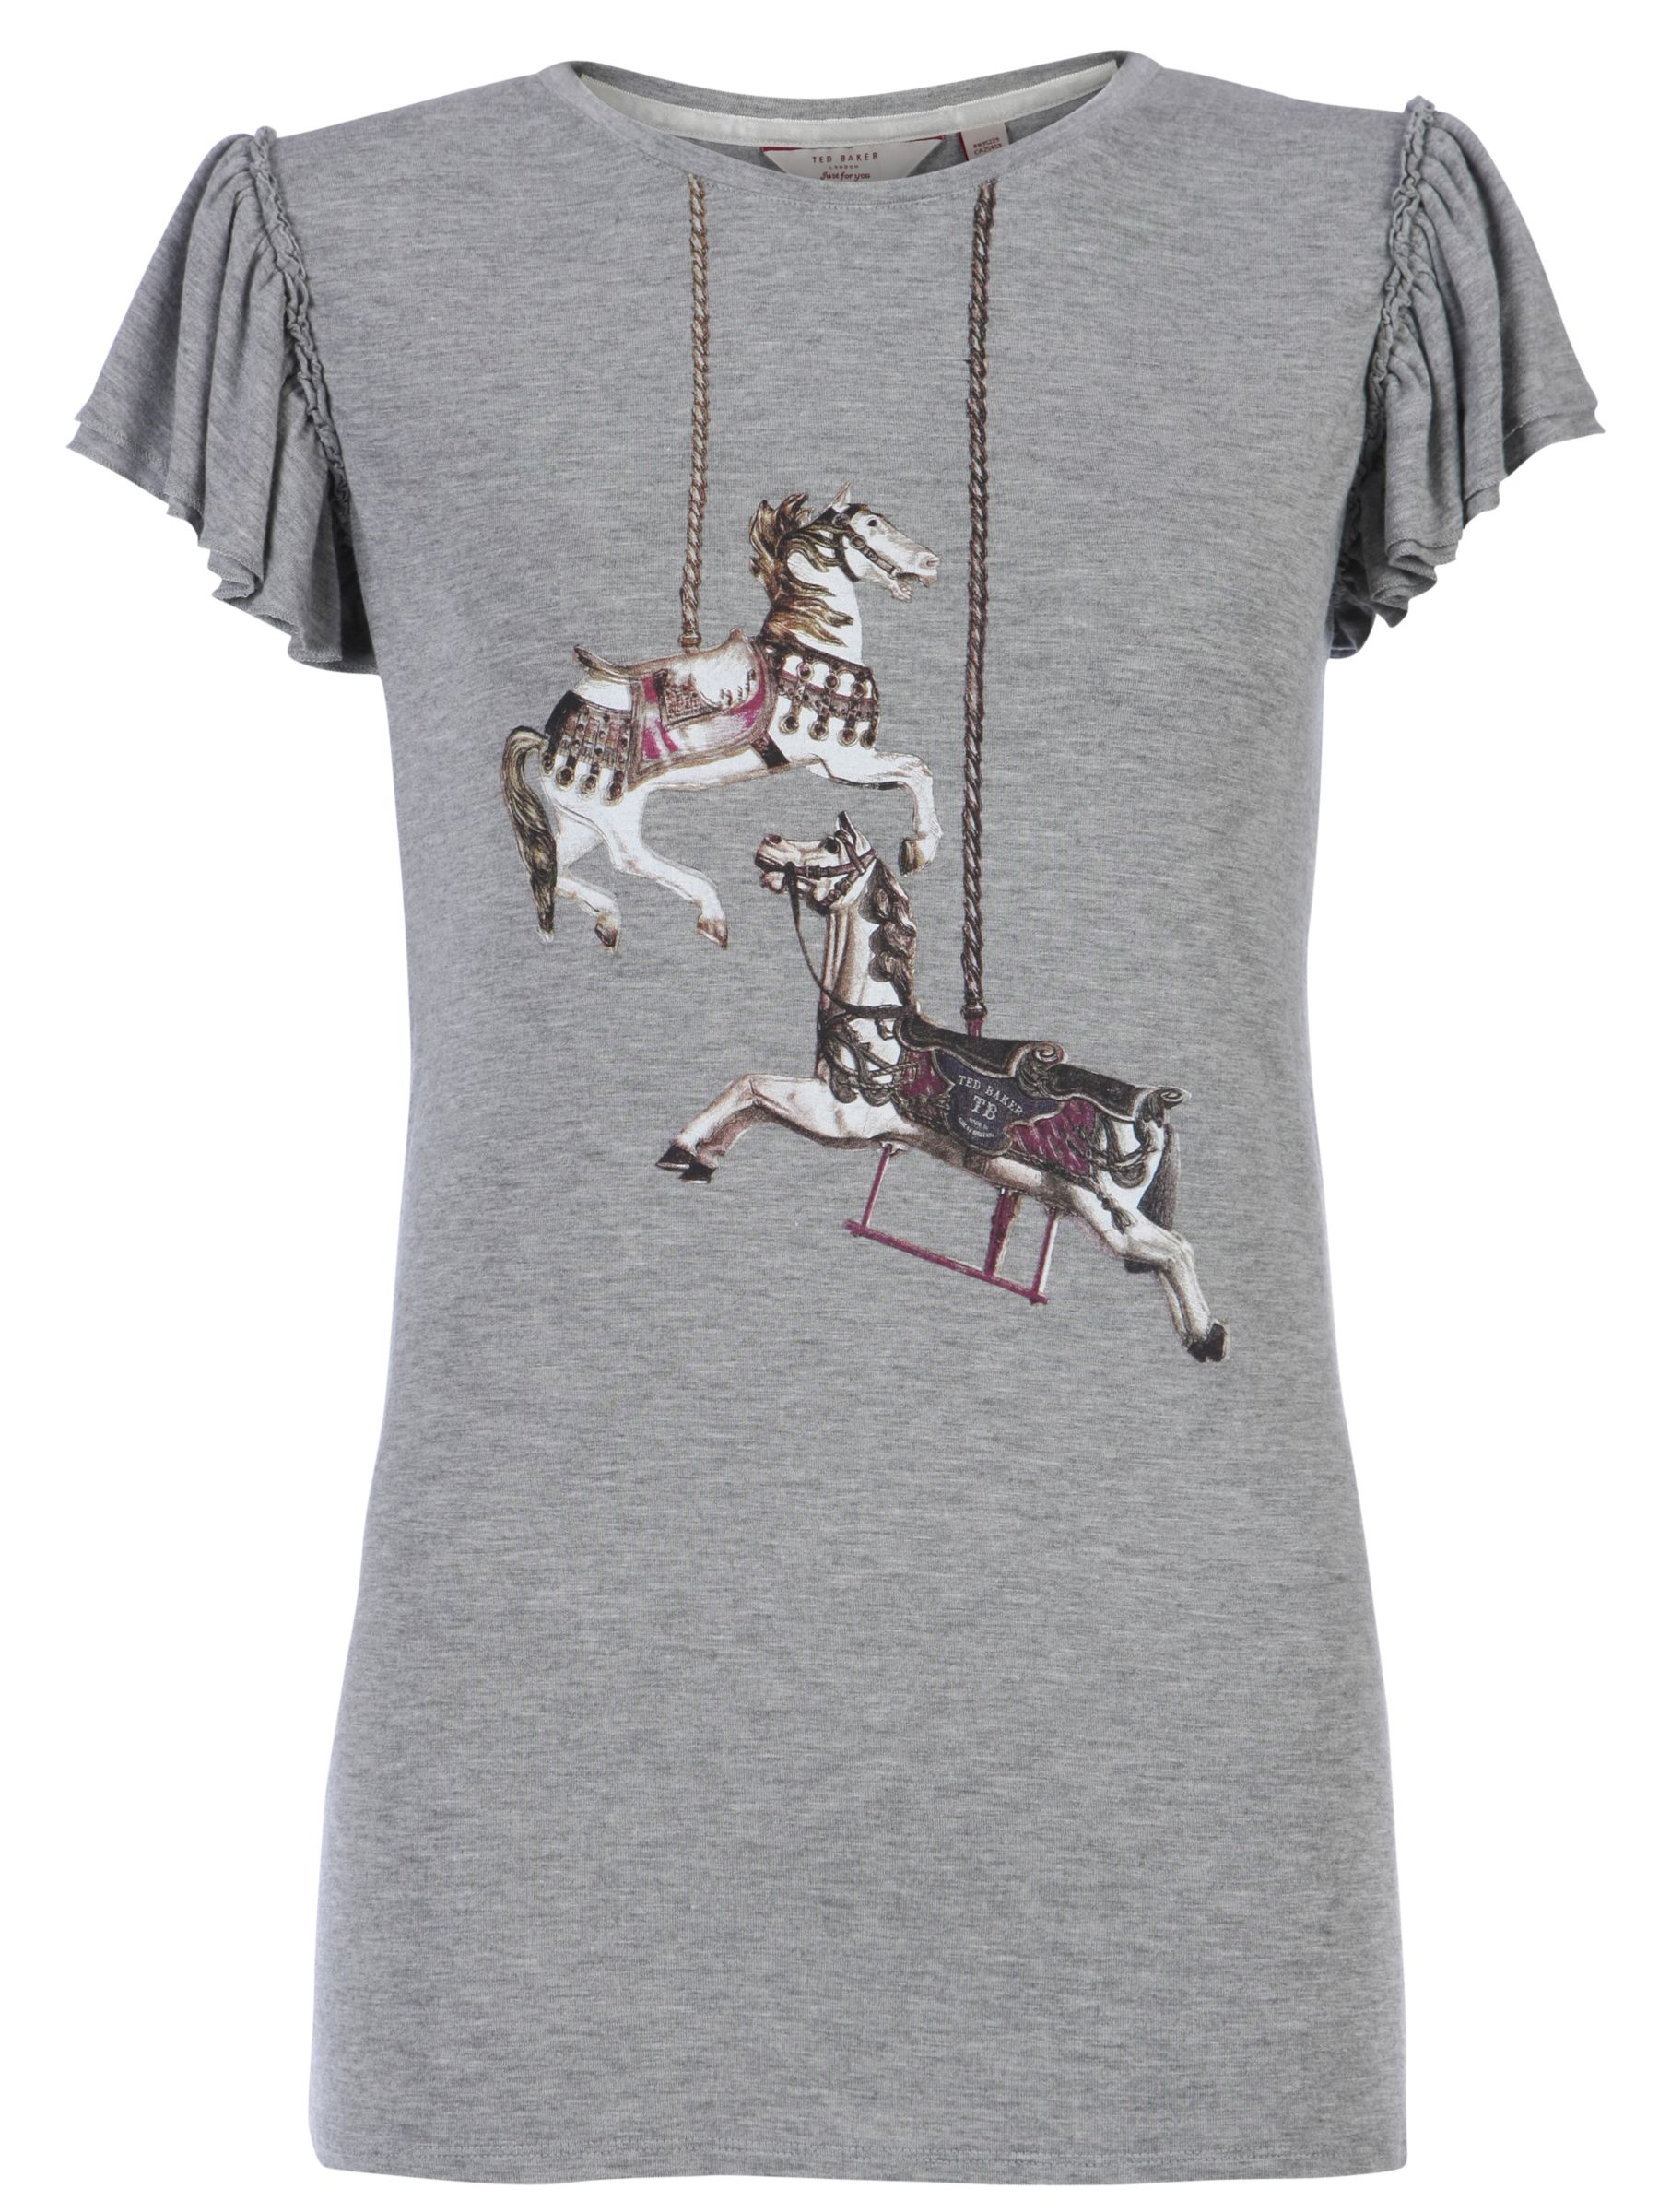 Carousel Print T-Shirt, Grey Marl